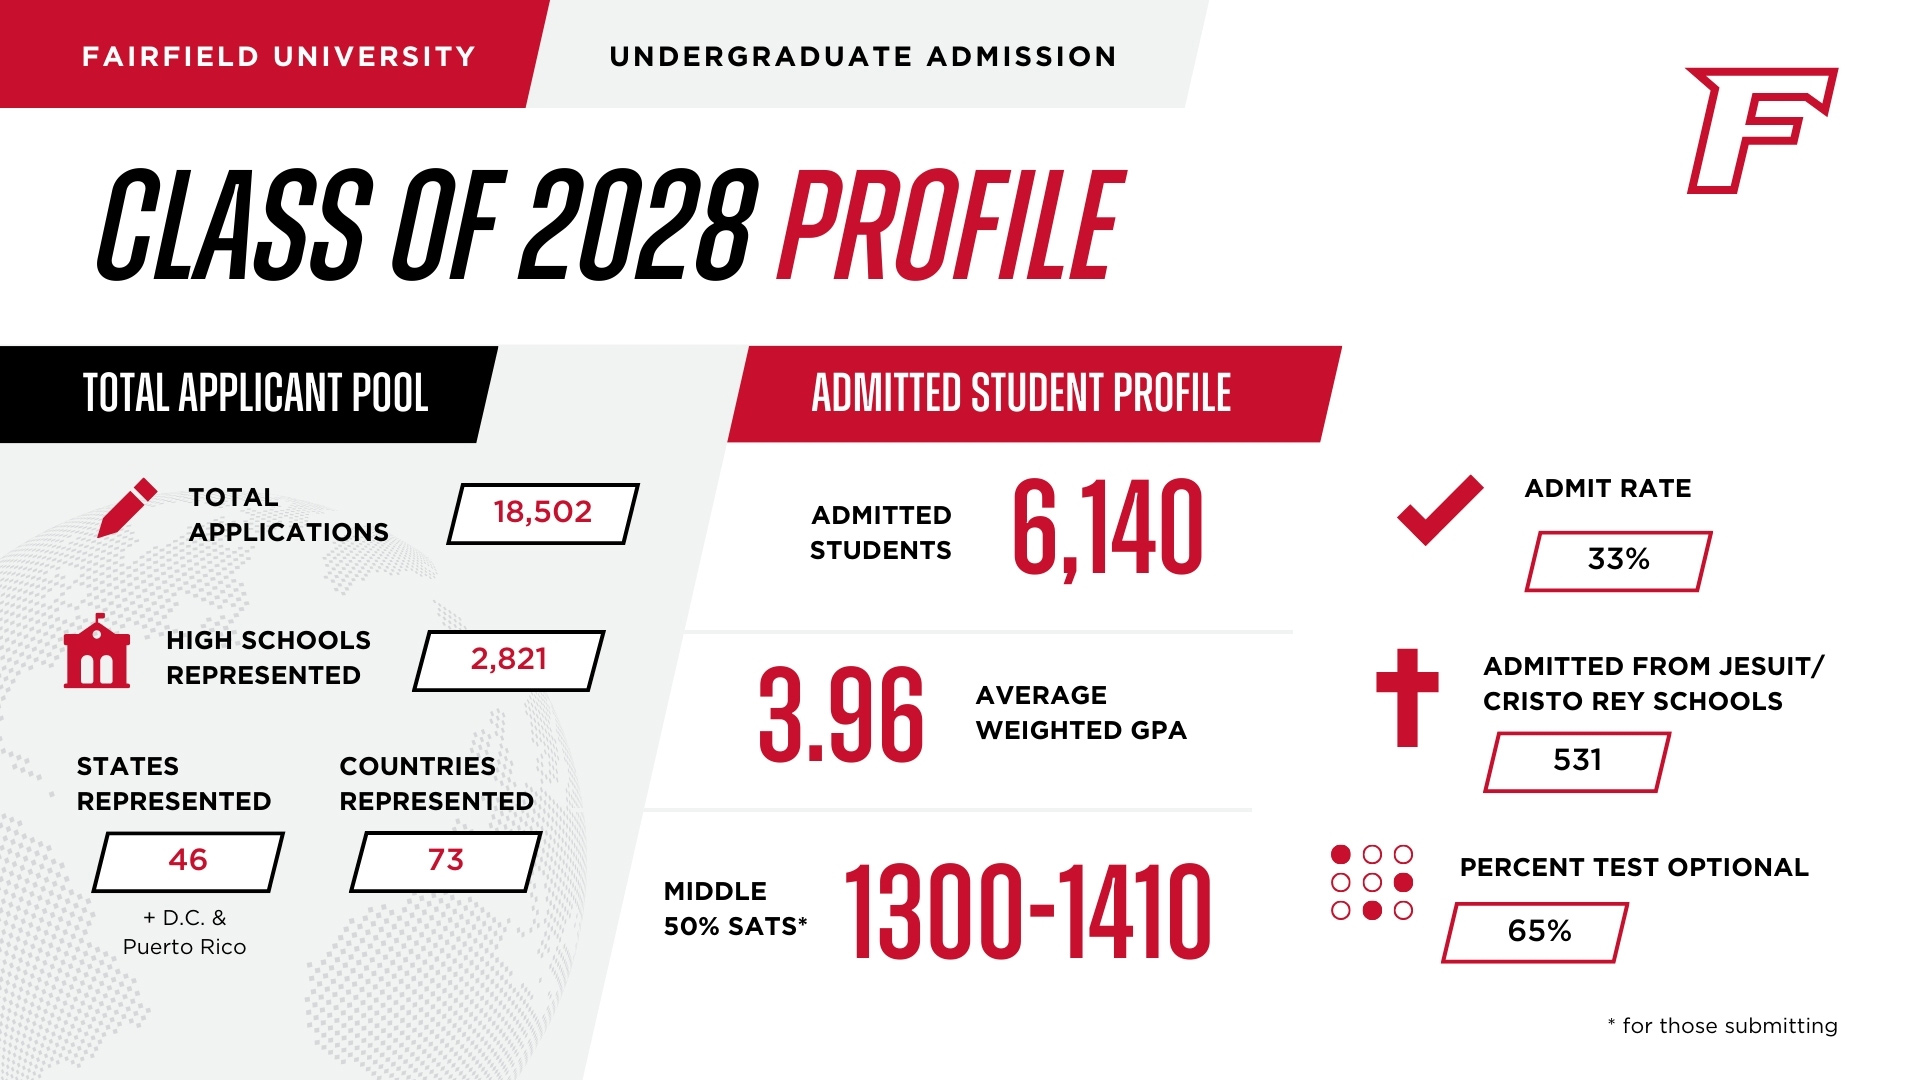 Class of 2028 Undergraduate Admission Profile